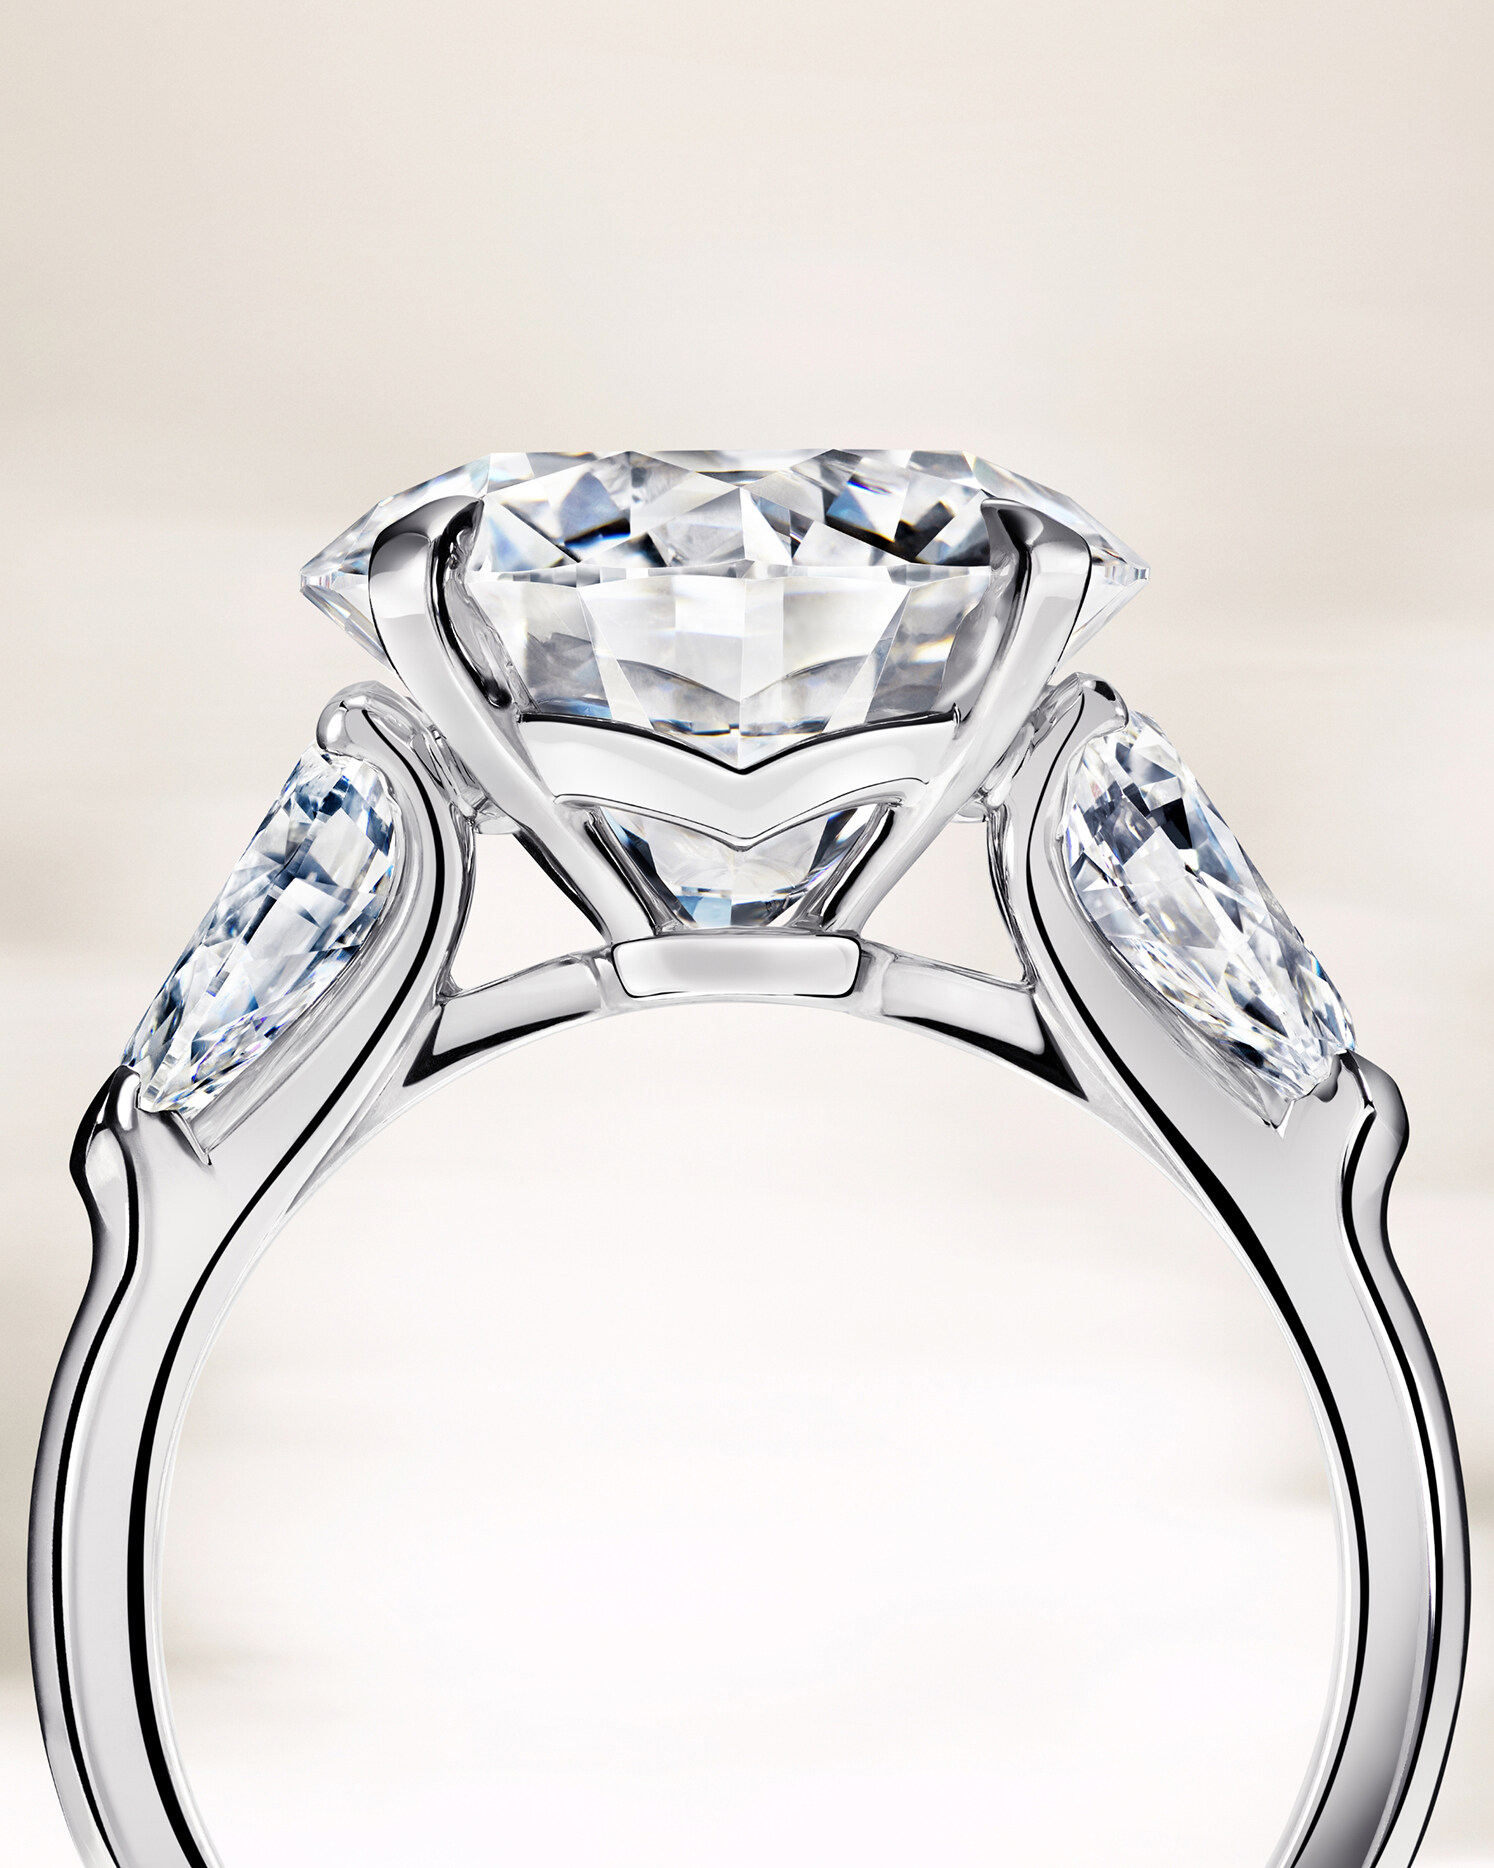 Graff重新演繹優雅雋永的Promise鑲嵌設計珠寶與全新婚嫁廣告同步登場。